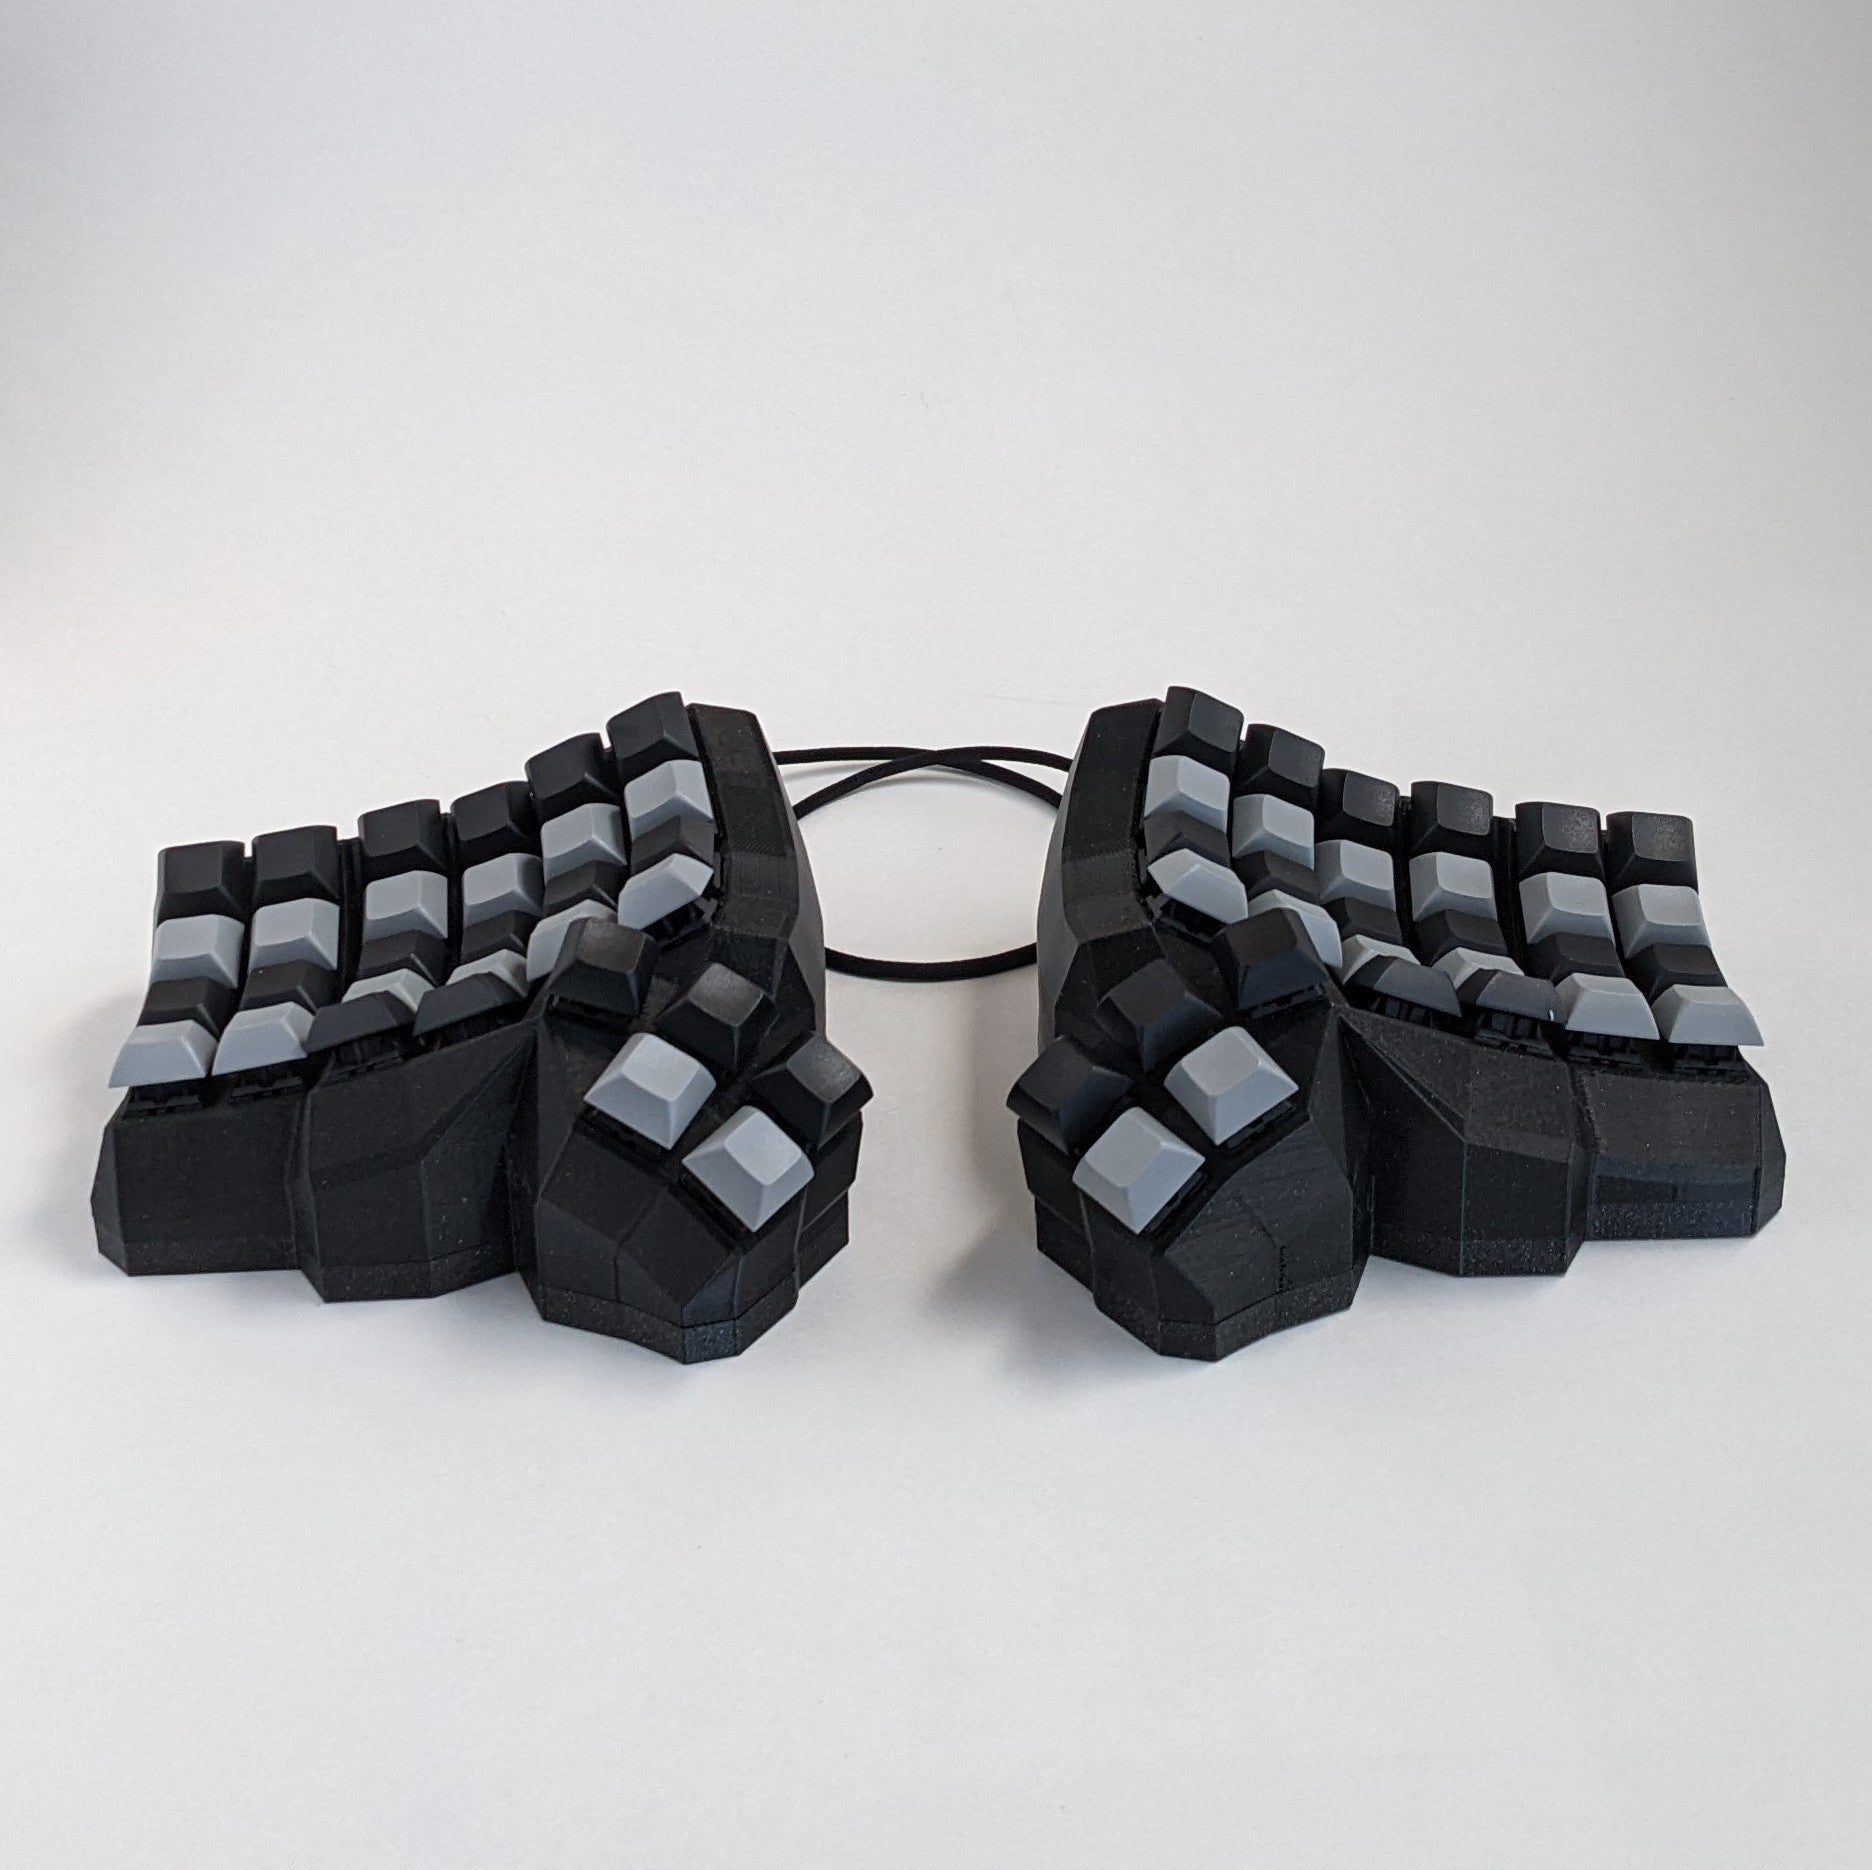 taikohub ergonomic split hotswappable mechanical keyboard size medium in black 2022